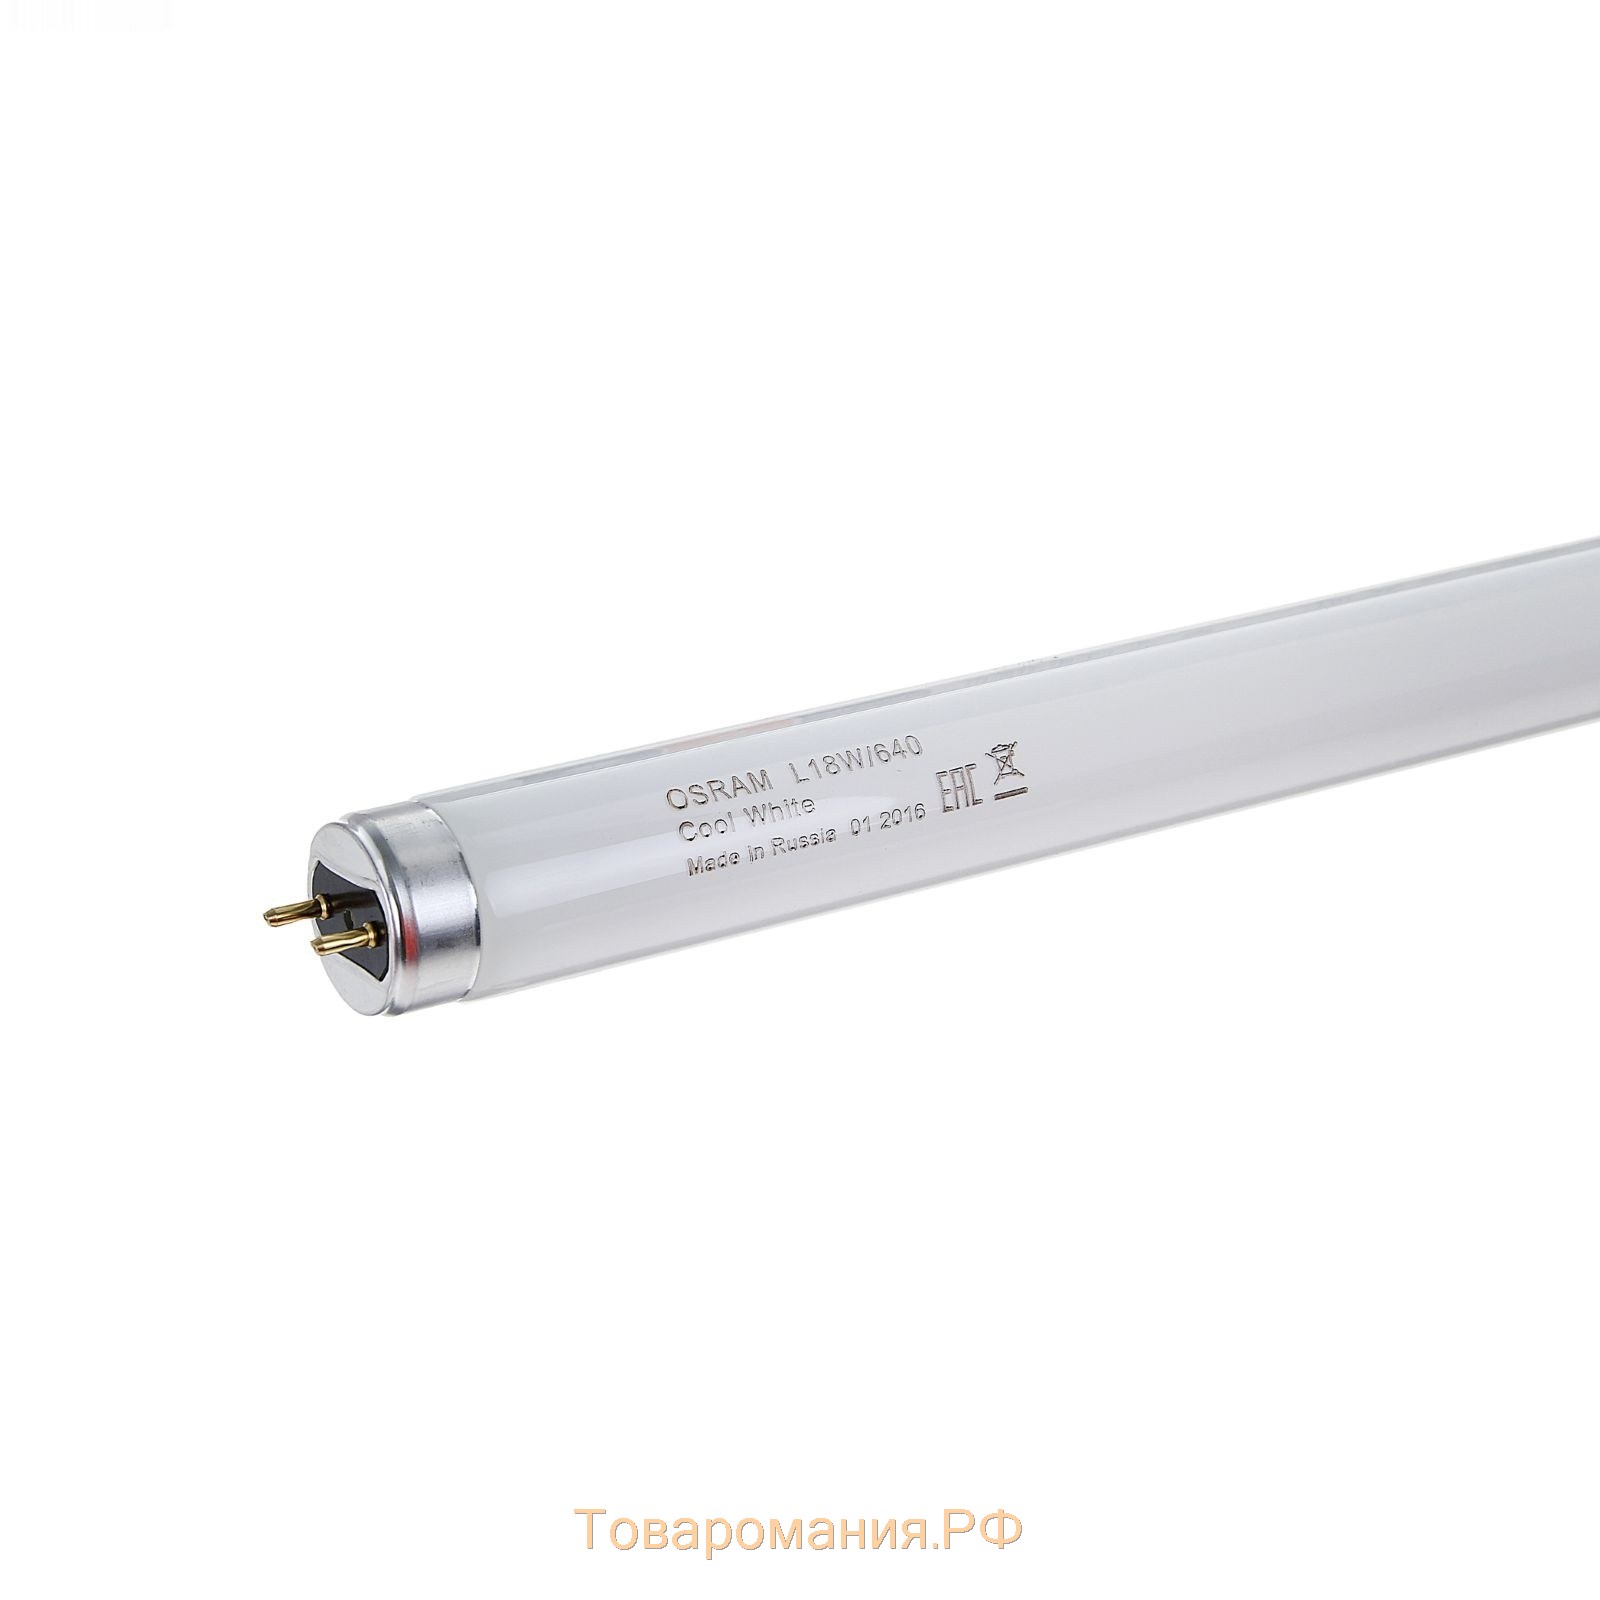 Лампа люминесцентная Osram L 18W/640, G13, 18 Вт, 4000 К, 590 мм